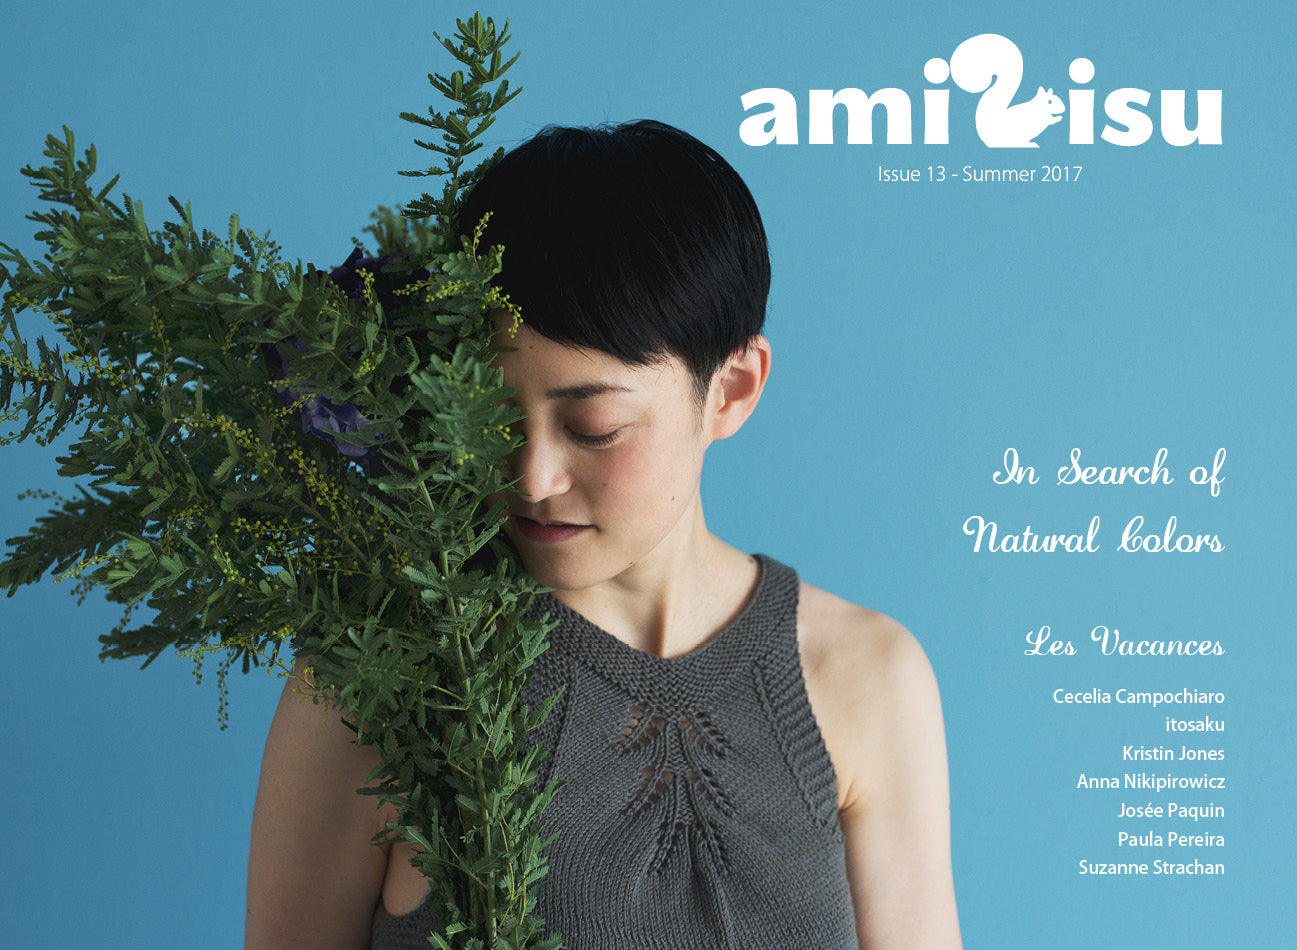 amirisu issue 13 cover